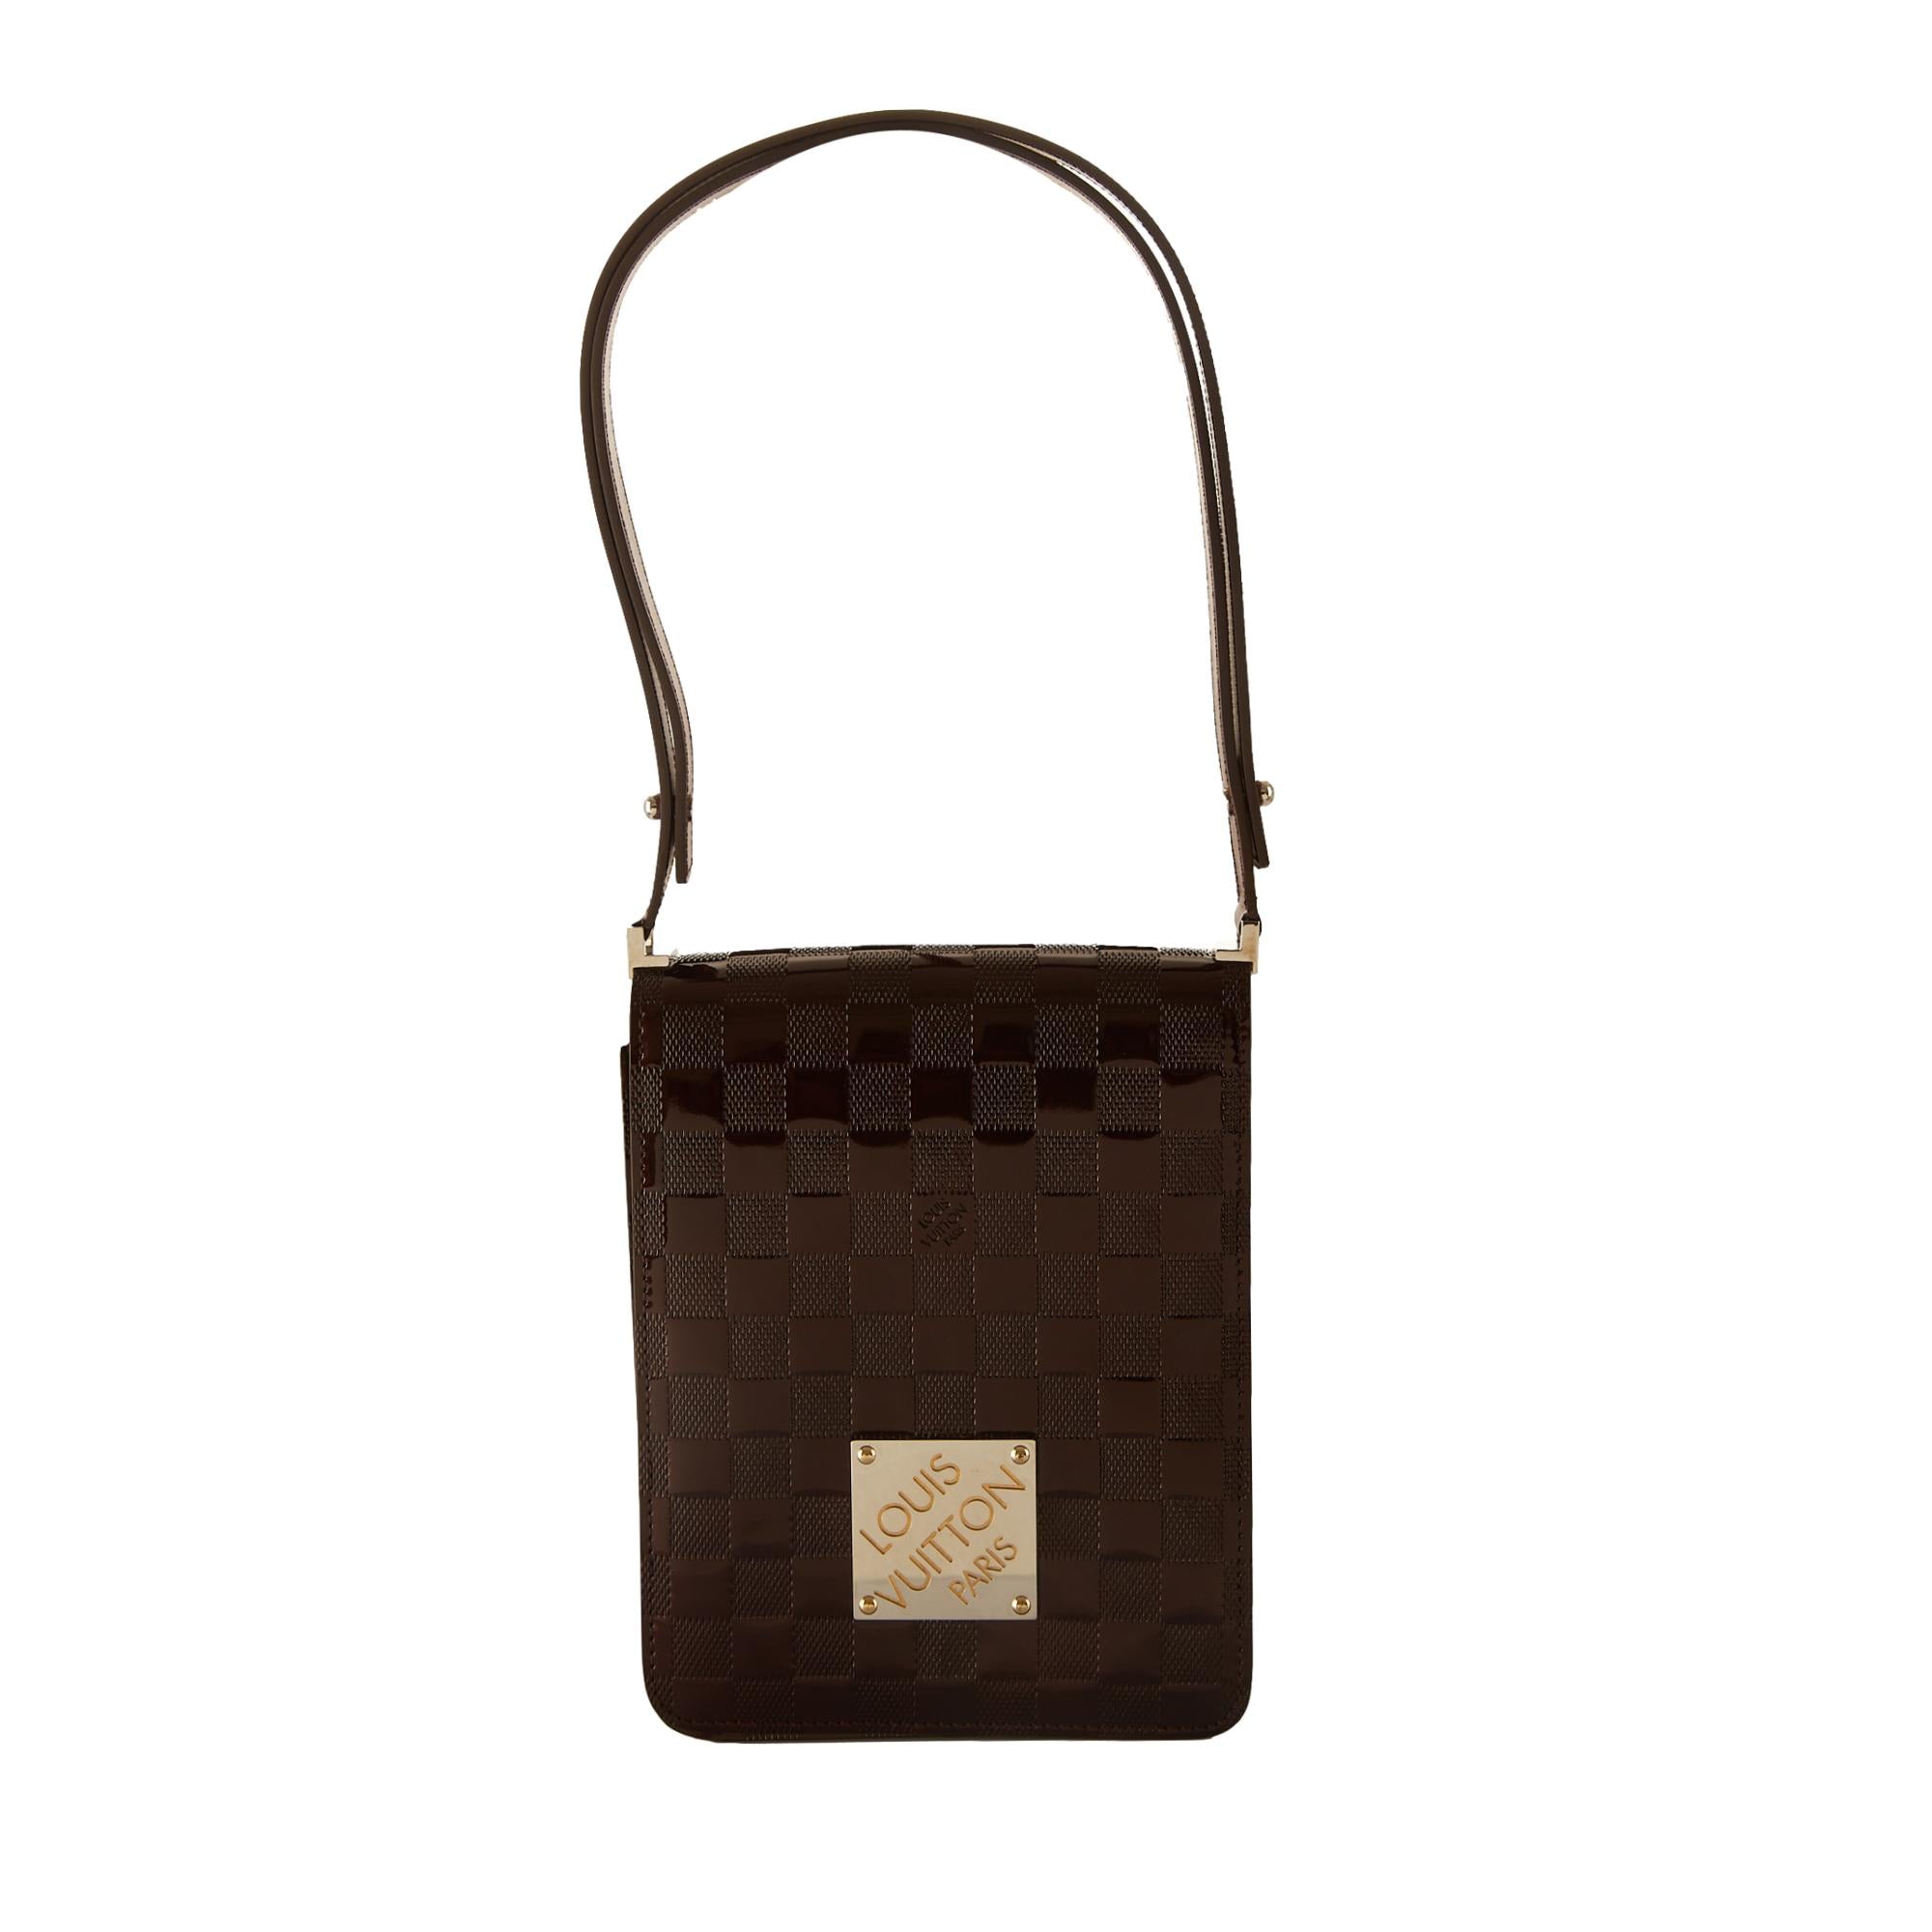 Pink Louis Vuitton 2-way handbag, Handbag Messenger bag Shoulder